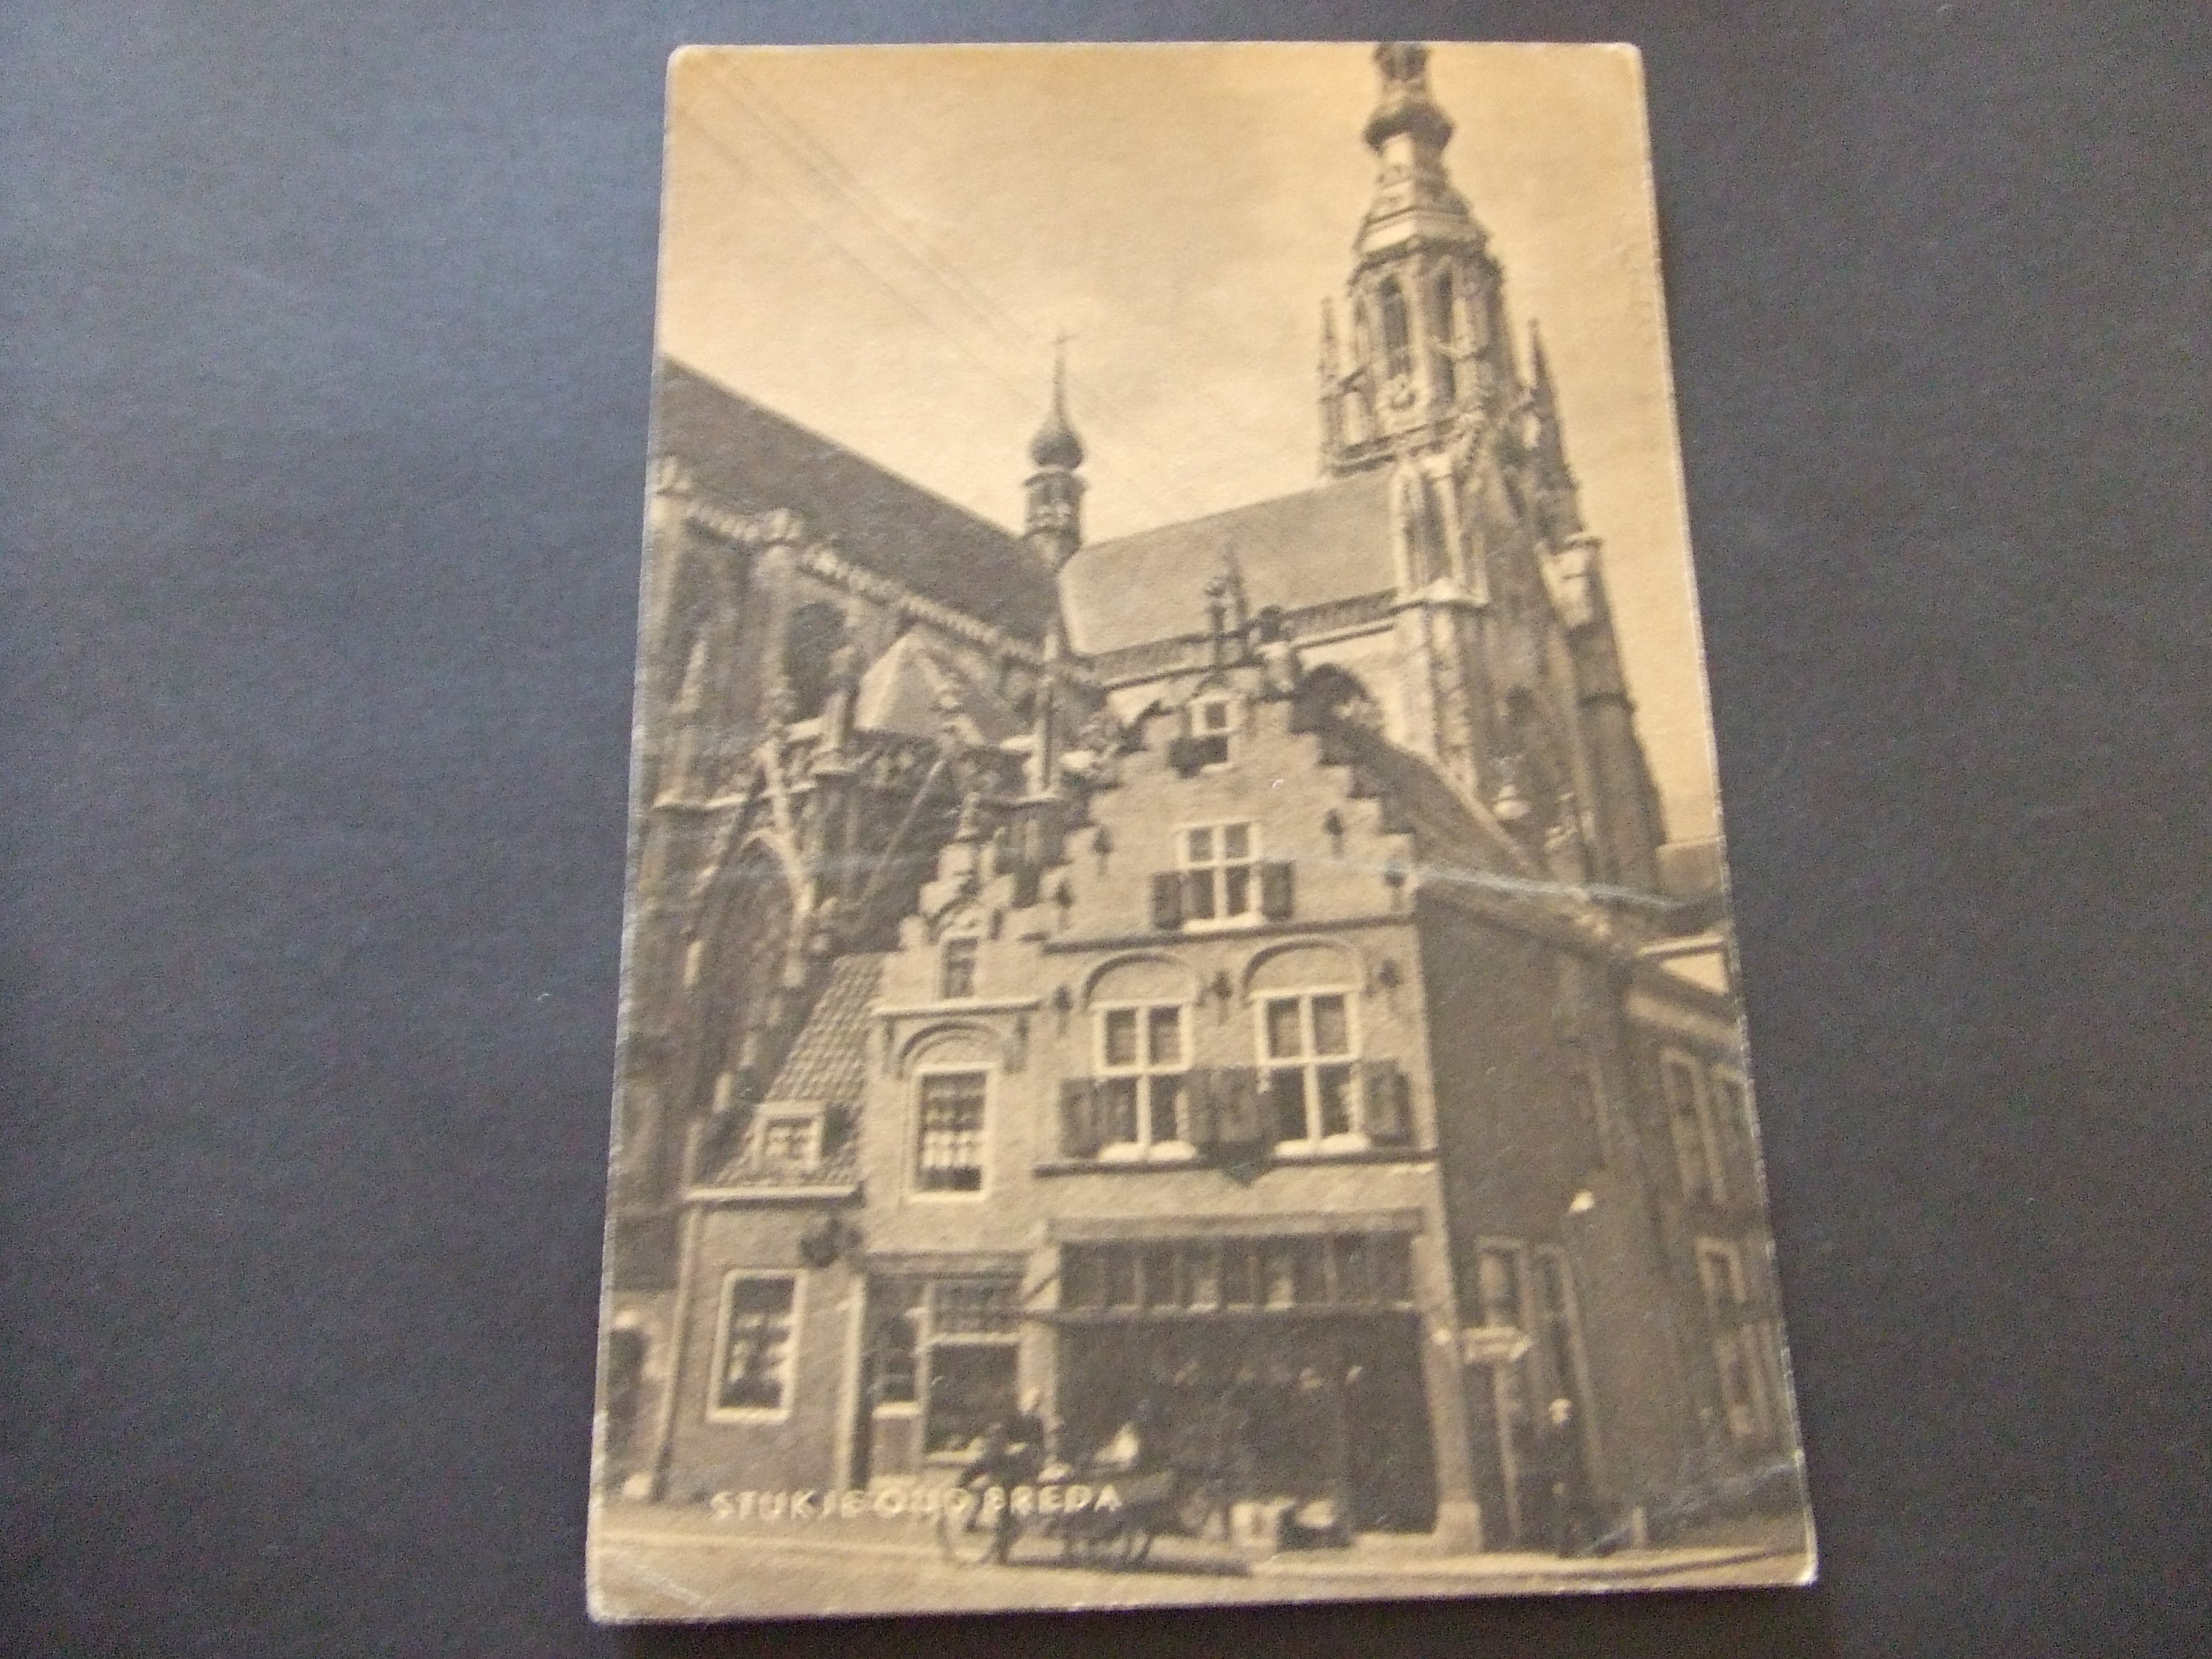 Breda 1949 oude gebouwen